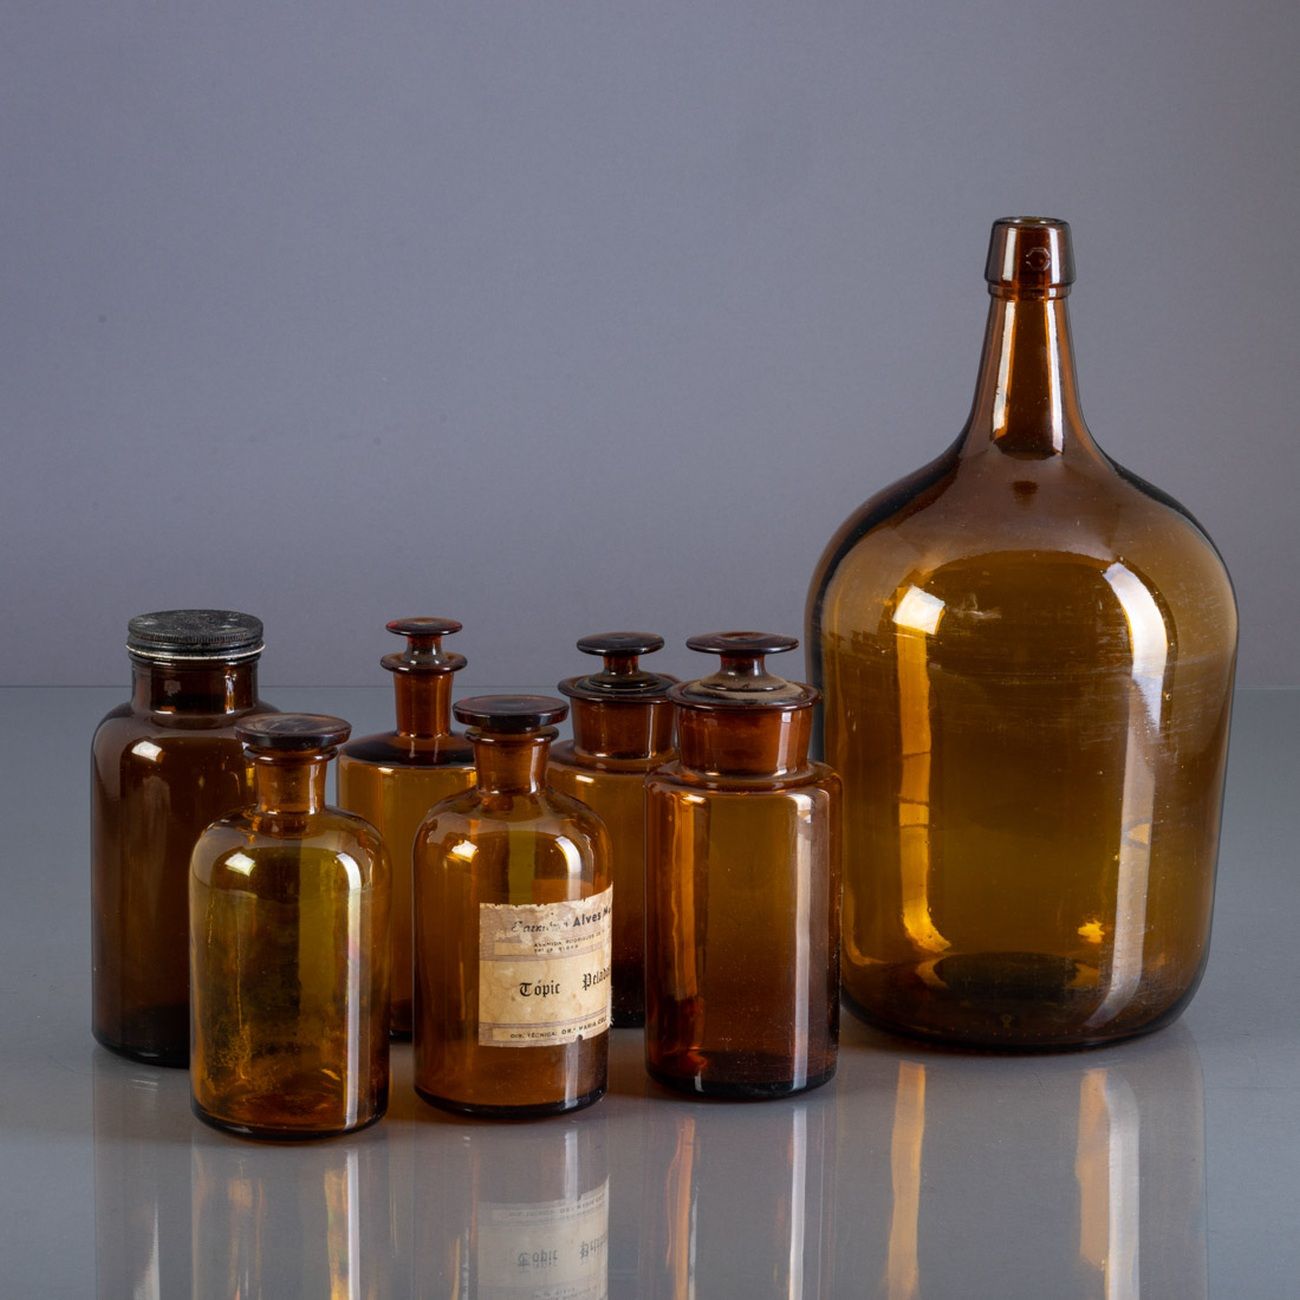 GARRAFÃO E SEIS FRASCOS DE FARMÁCIA 药瓶和六个药瓶，棕色玻璃。有使用痕迹。_x000D_

尺寸：16.5至35厘米。